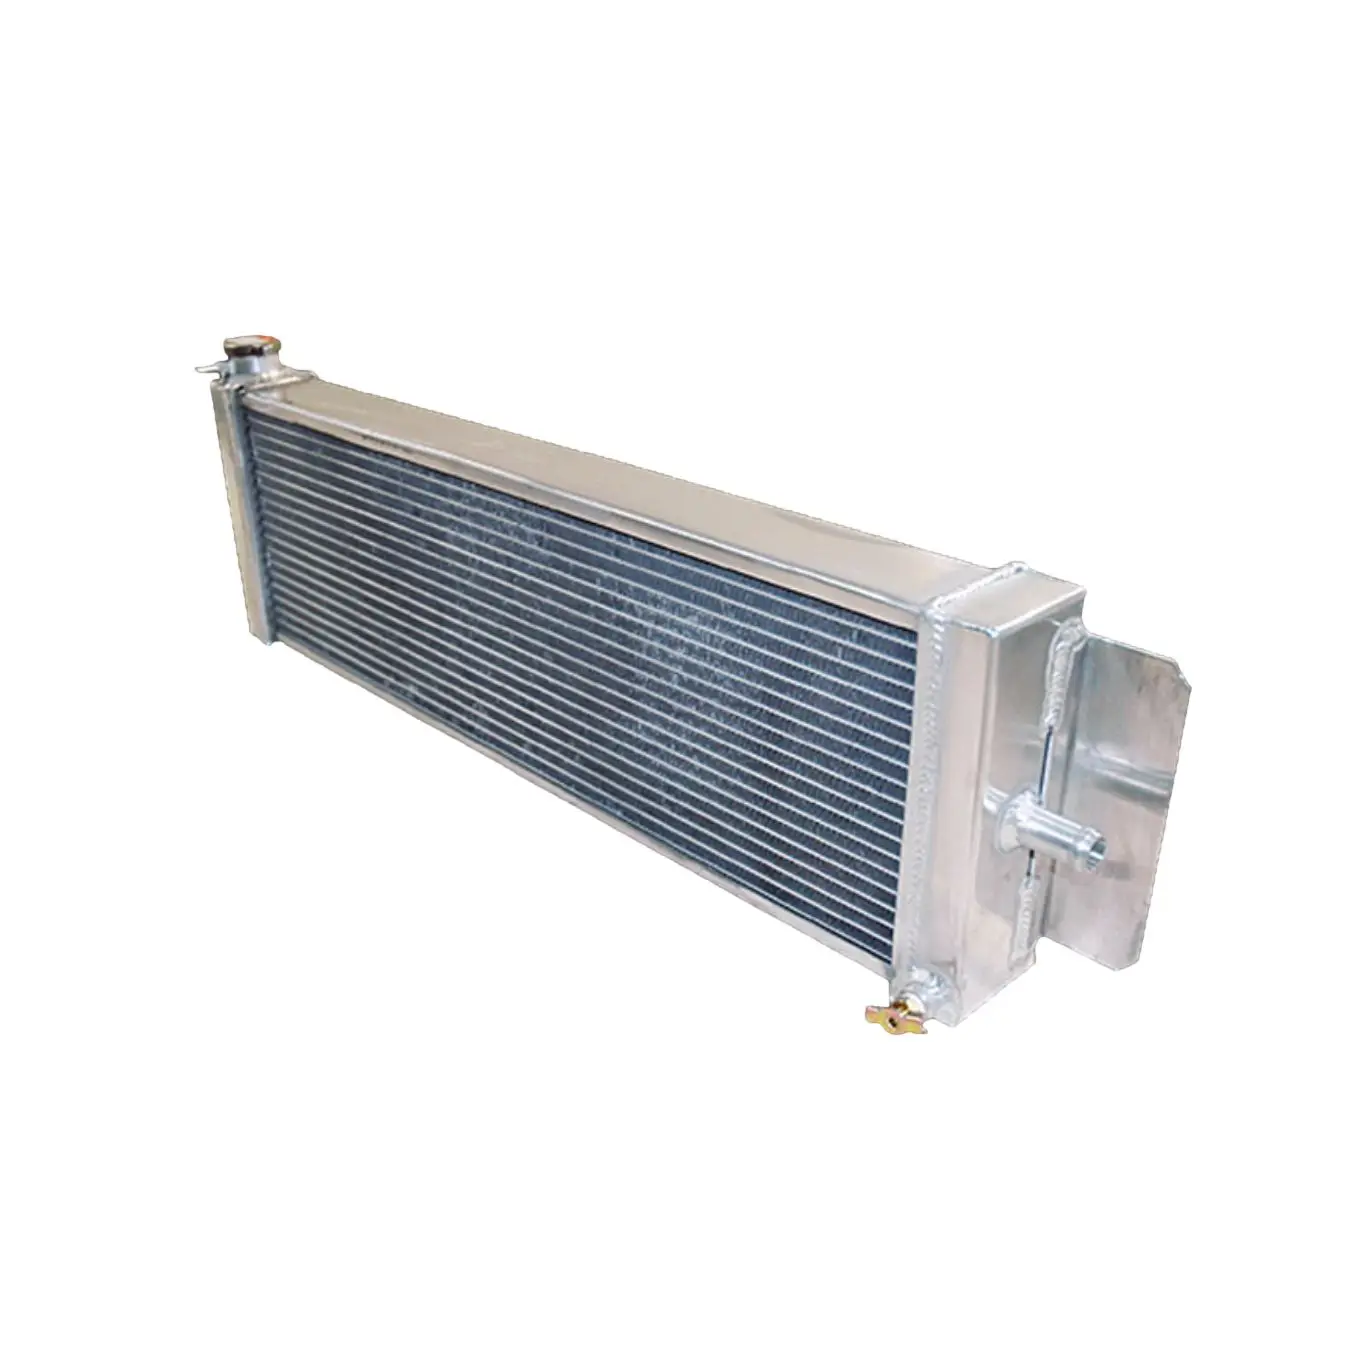 

24"x8"x2.5" Air to Water Intercooler Aluminum Heat Exchanger Radiator universal